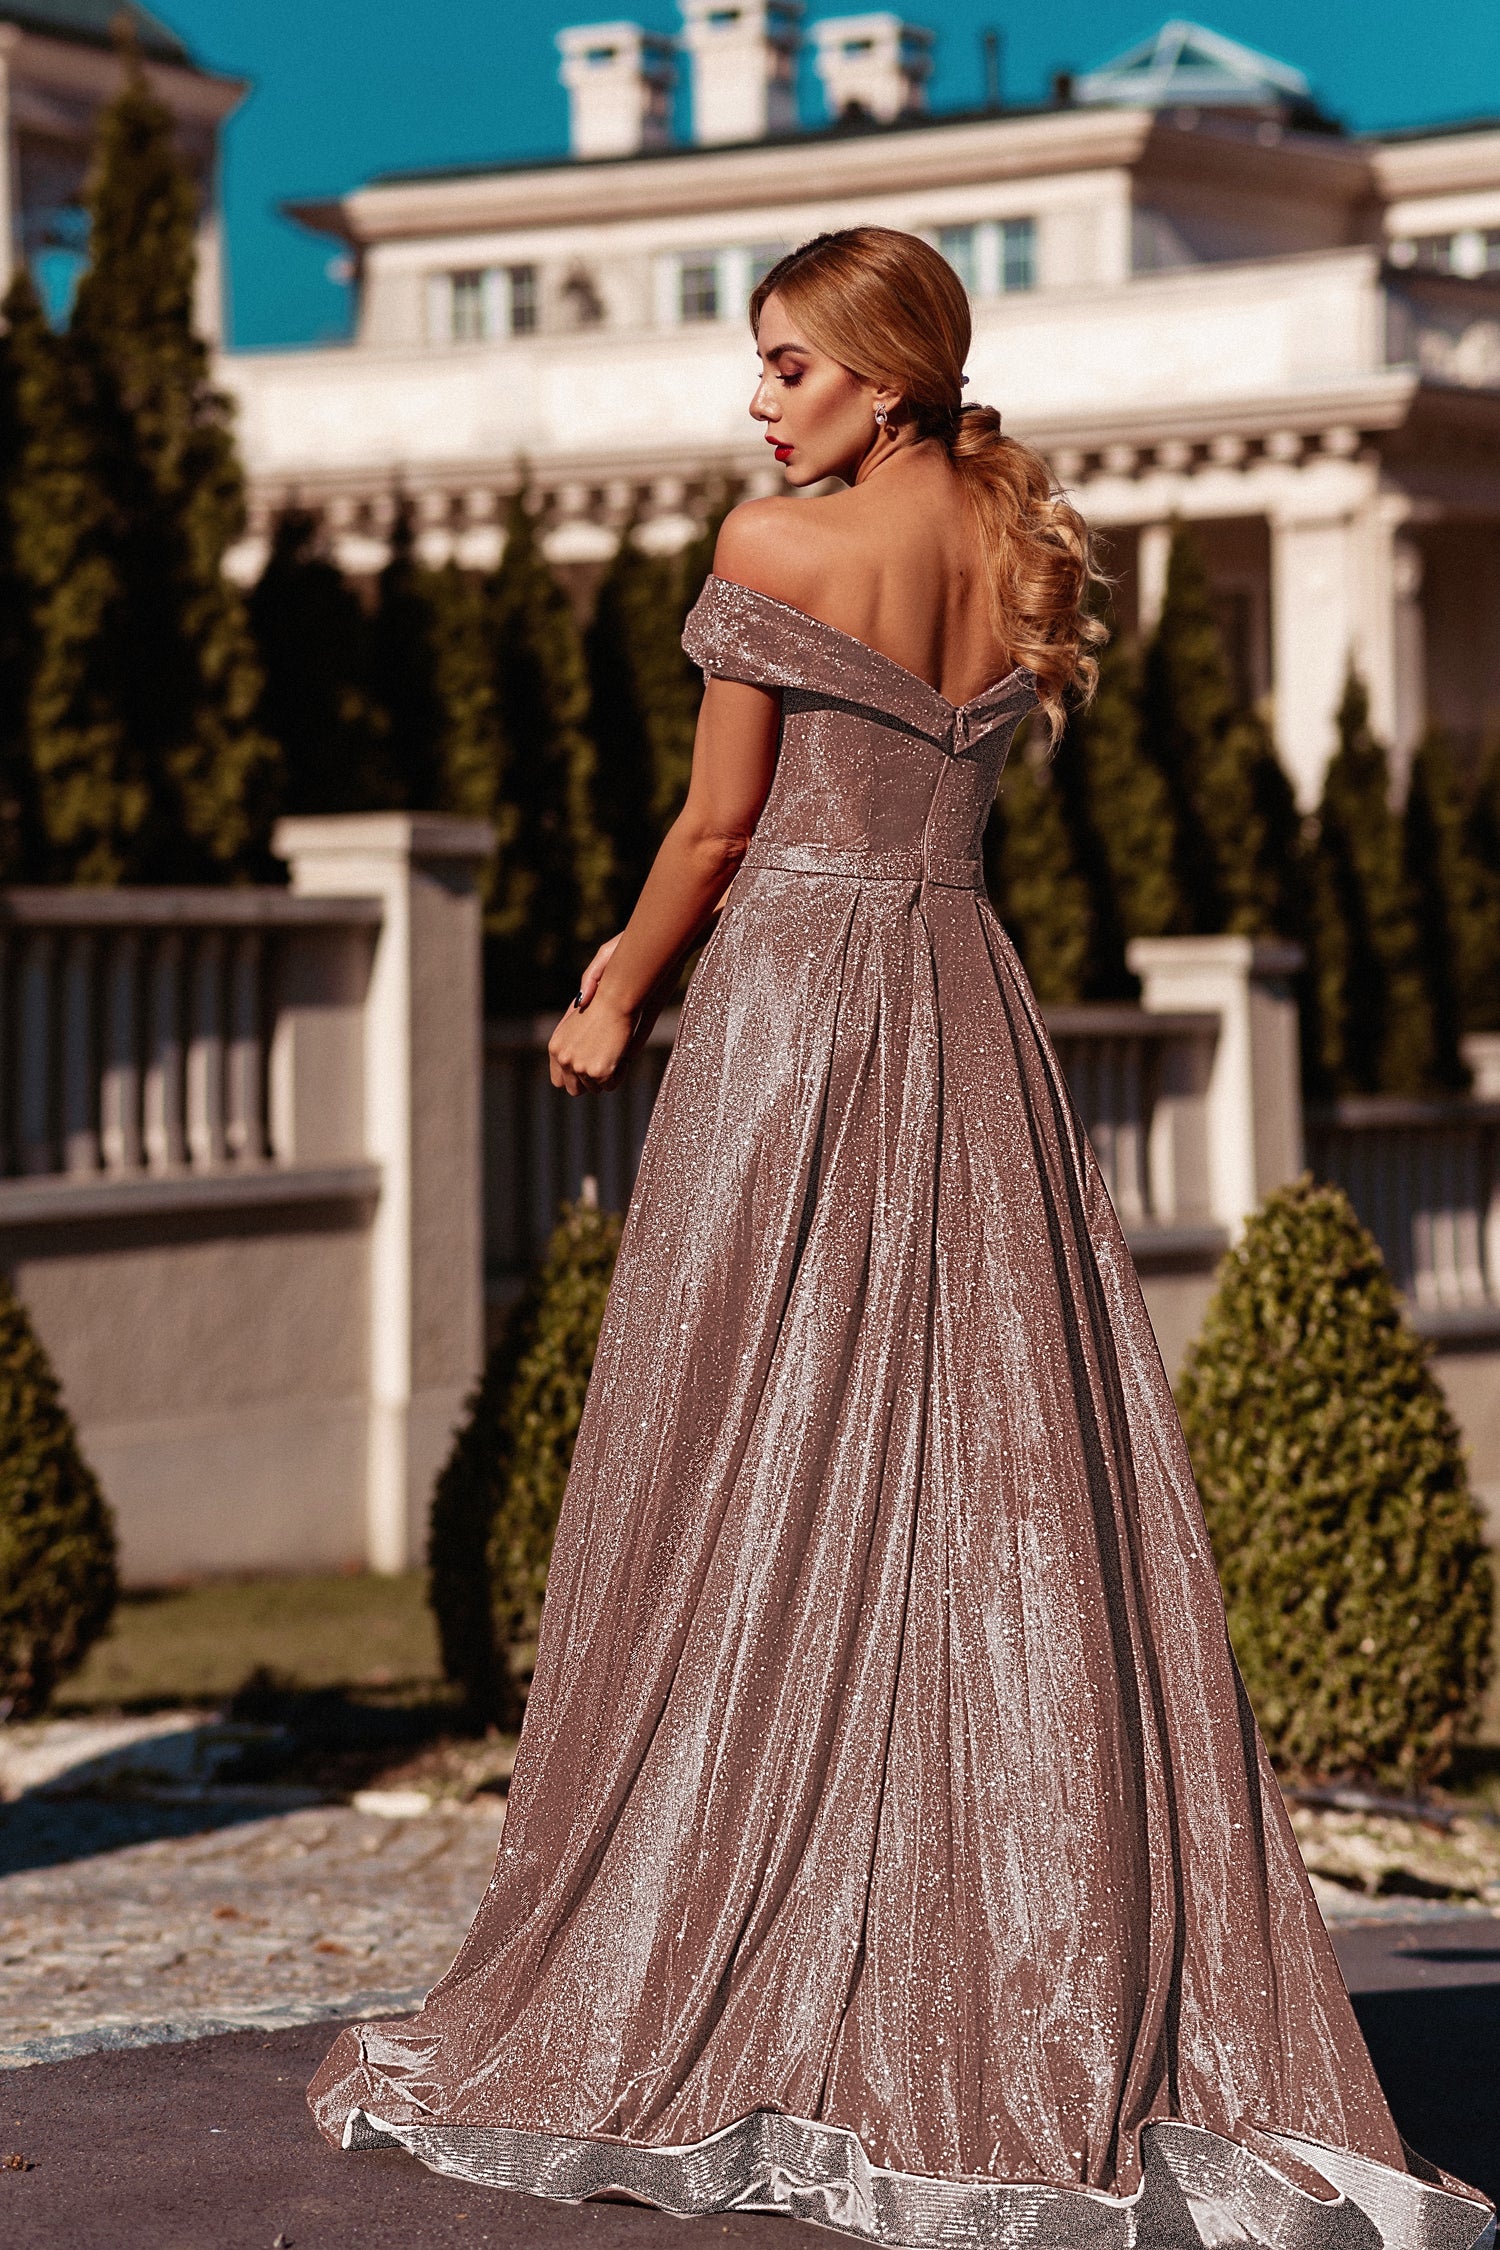 Tina Holly Couture Designer TW028 Steel Rose Glitter Formal Dress w Over Skirt